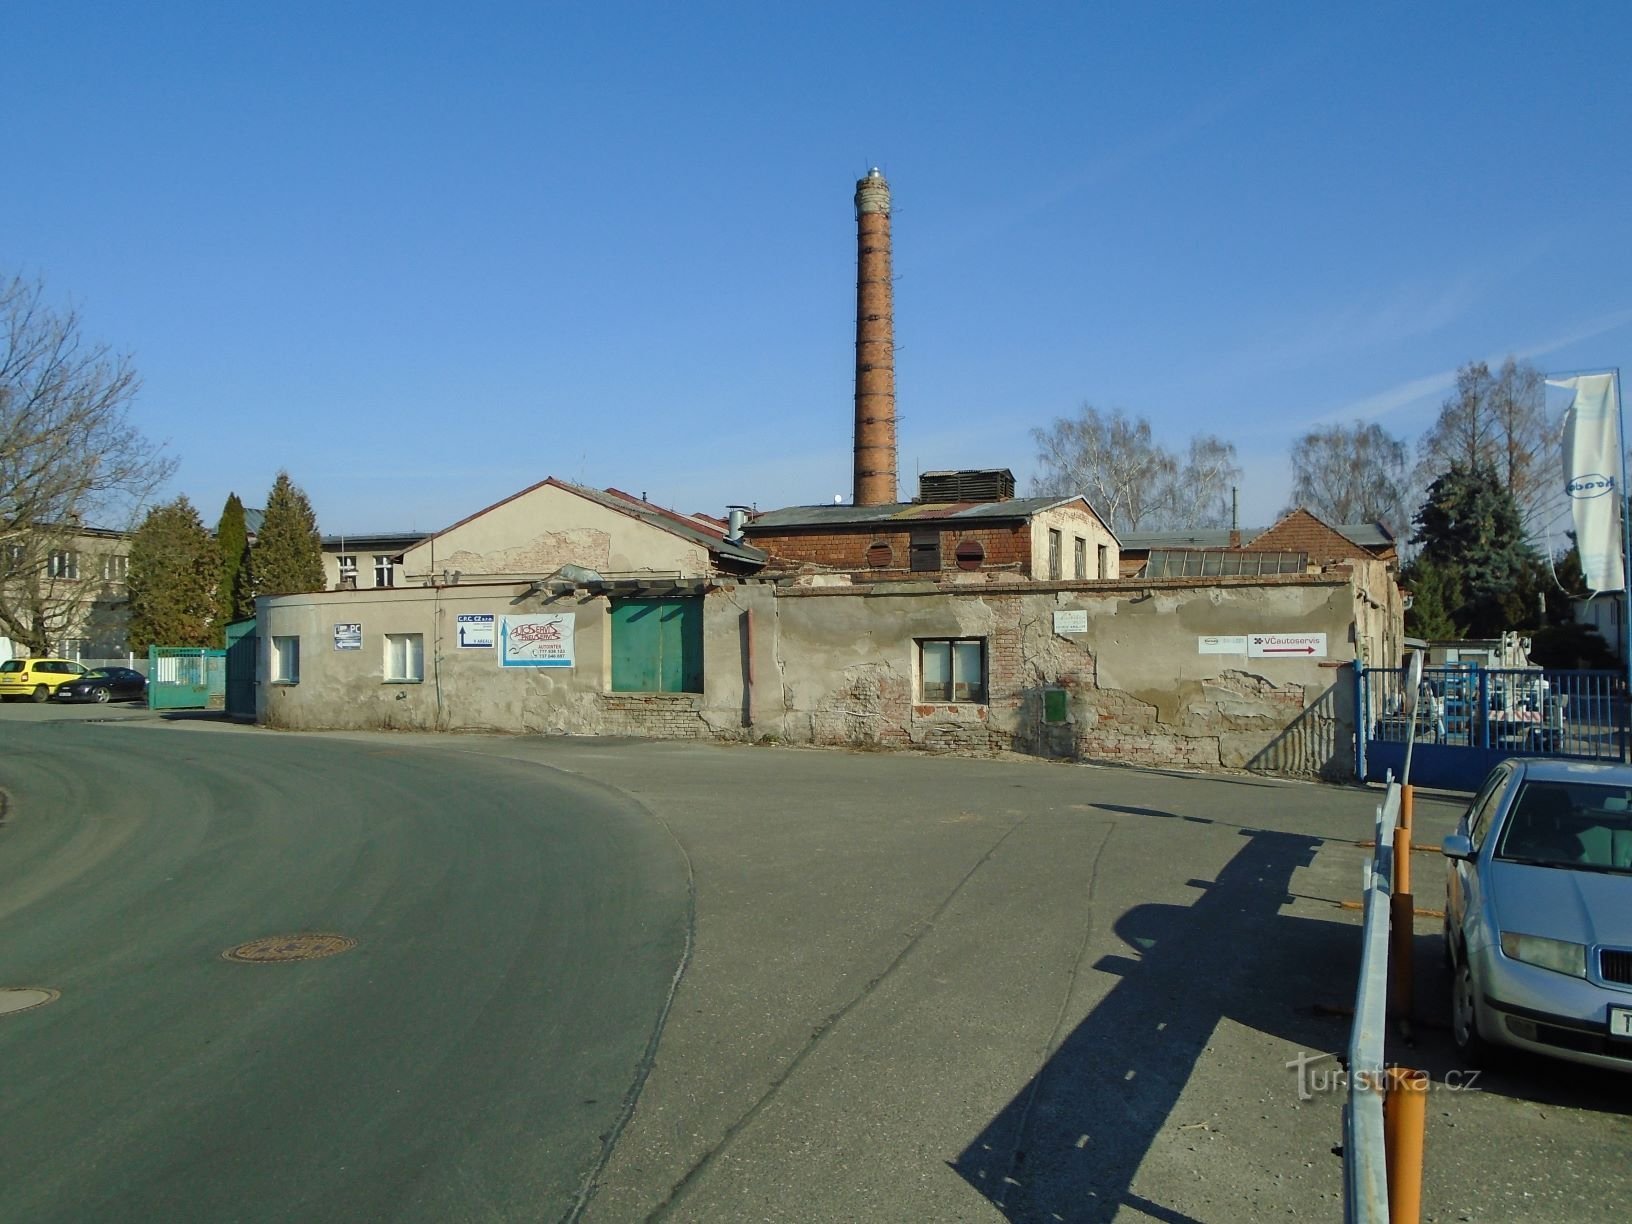 Distilleerderij nr. 182 (Hradec Králové, 30.3.2018/XNUMX/XNUMX)